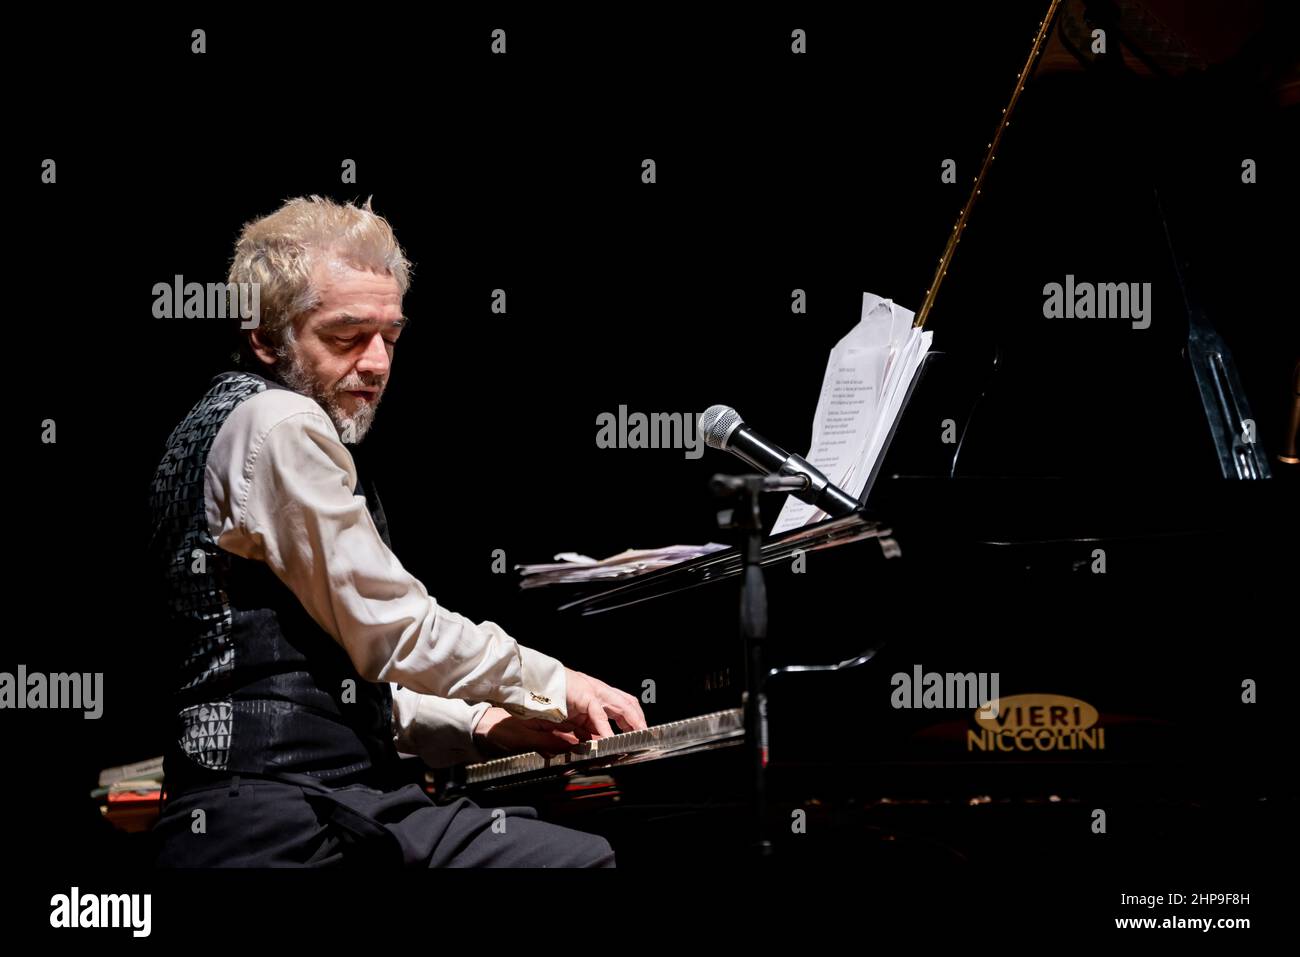 Marco Castoldi aka Morgan performing at Figline Valdarno (Fi). 22/10/2020 Copyright: KiaC.Photo Stock Photo